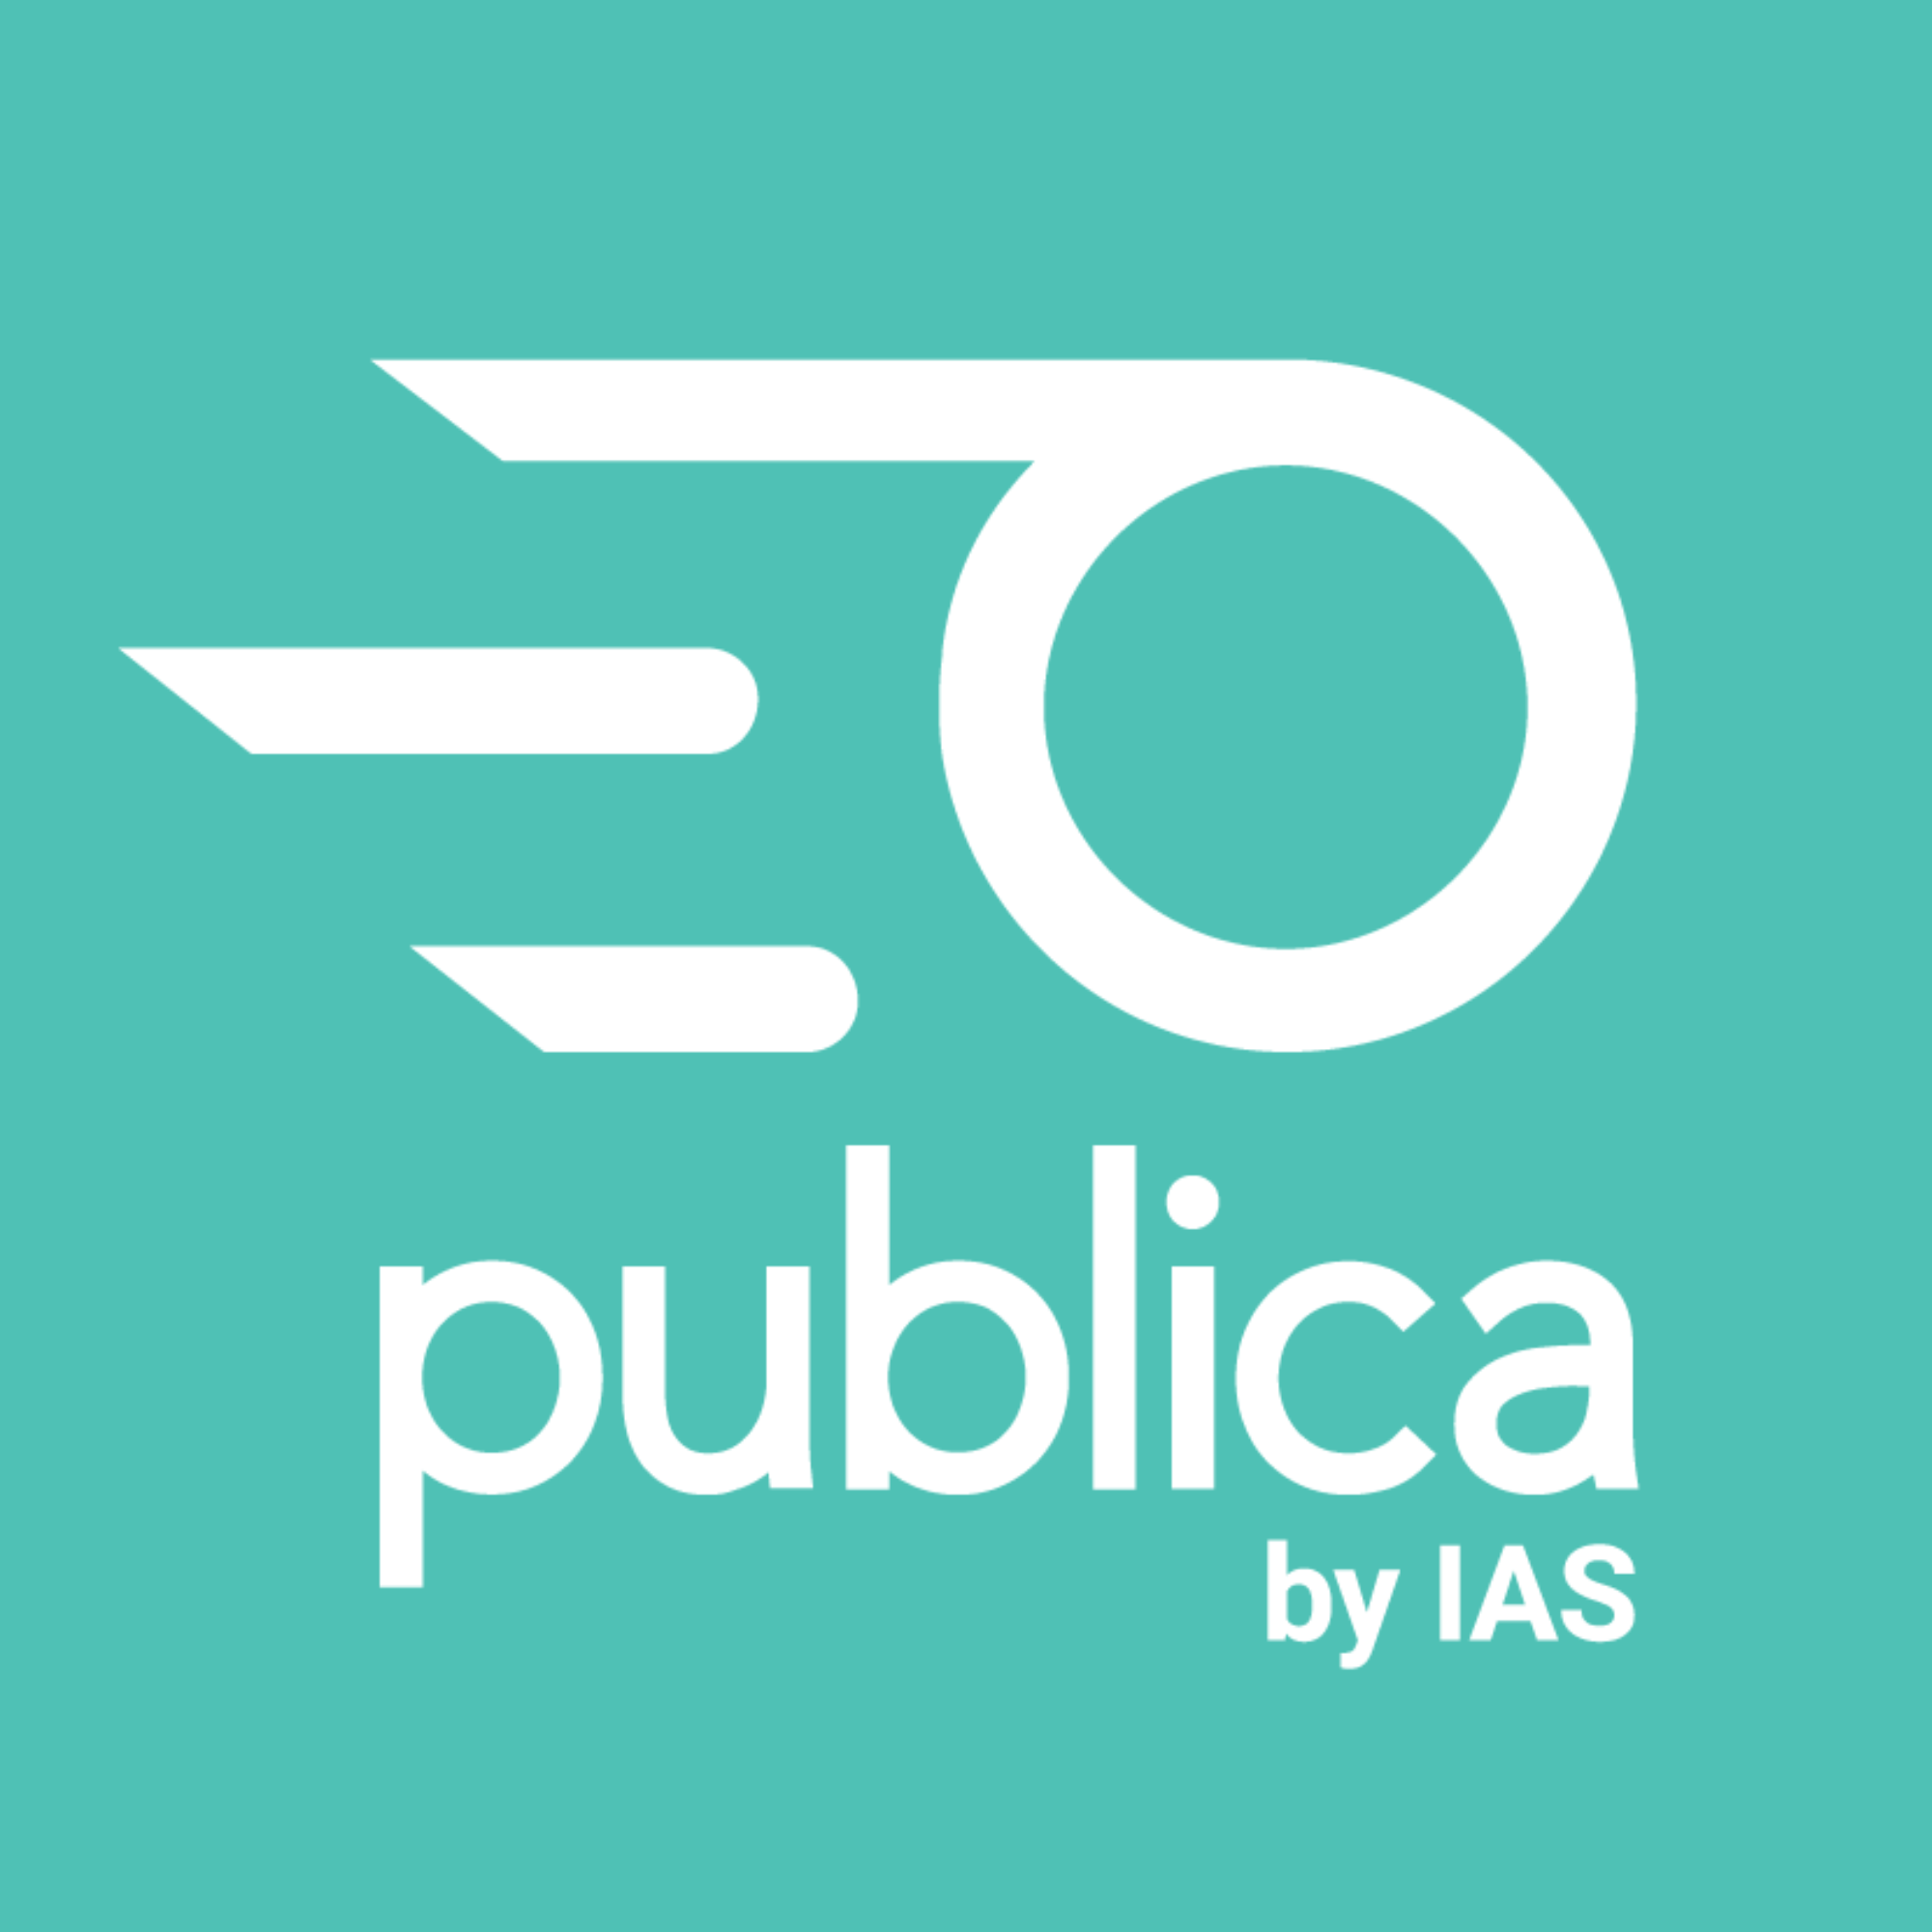 Publica by IAS